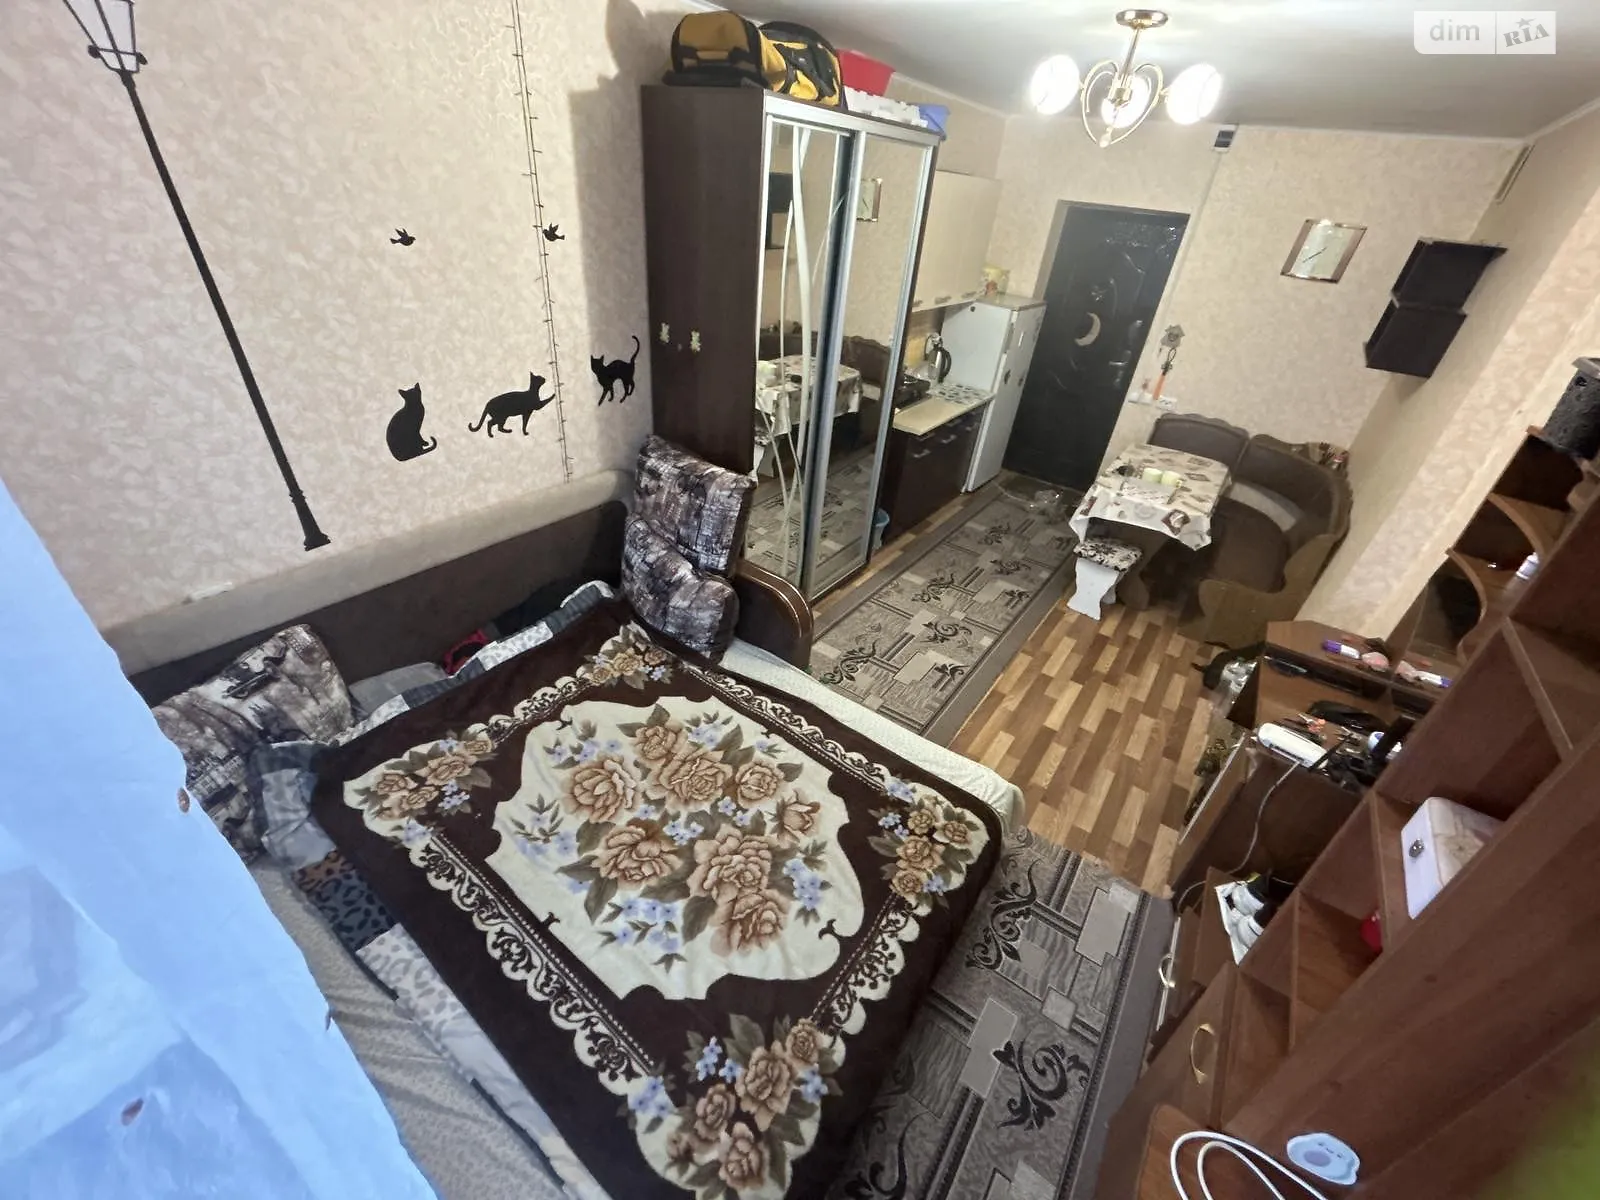 Продается комната 16.3 кв. м в Николаеве - фото 2